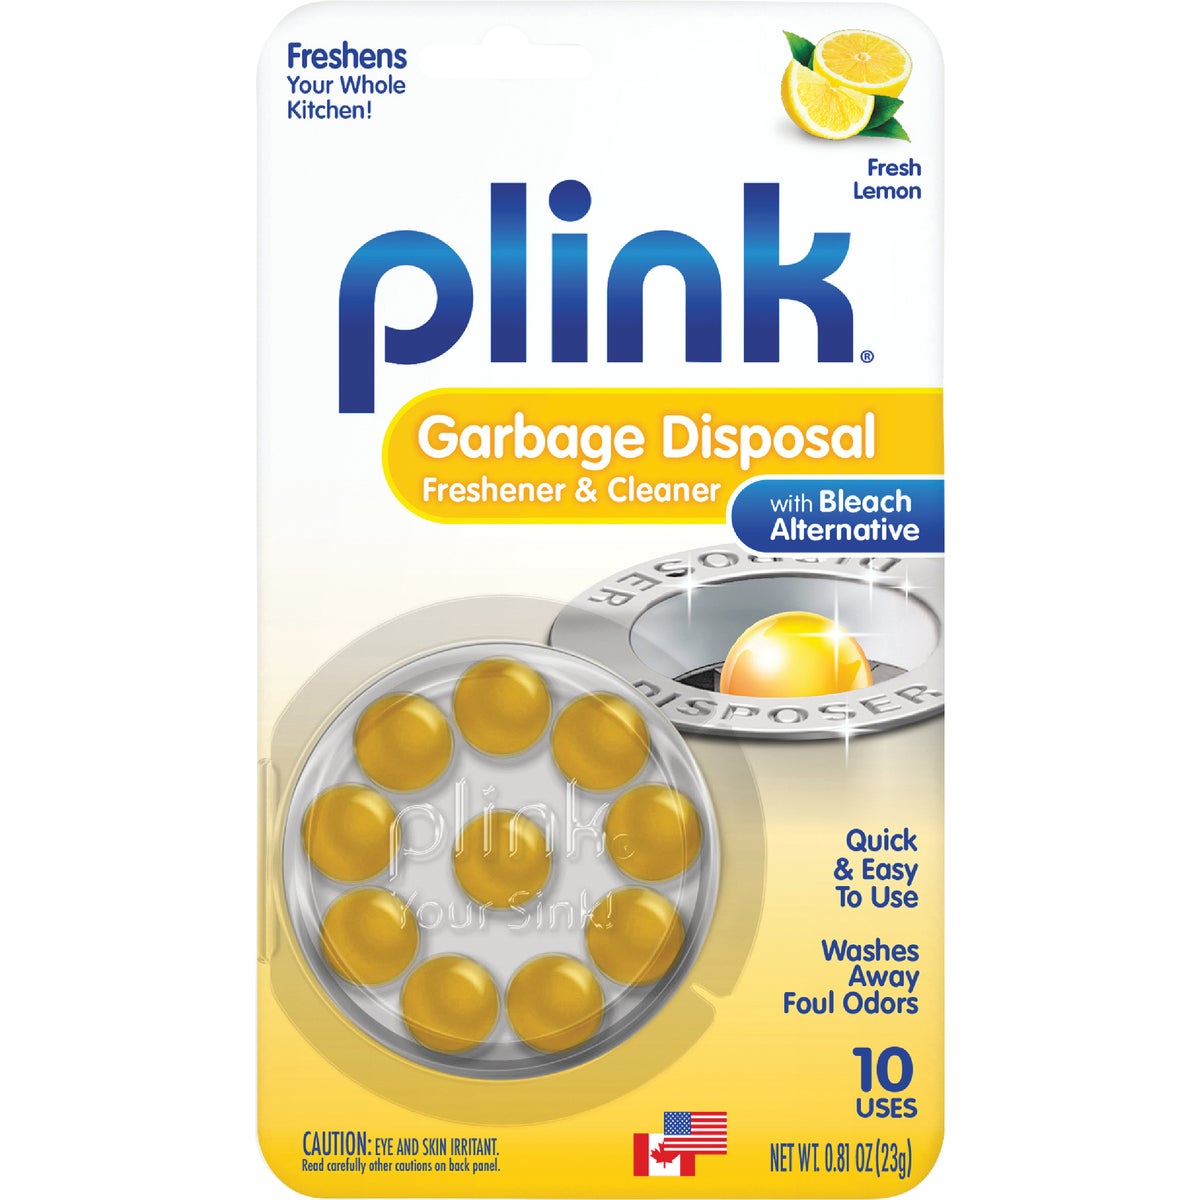 Plink Garbage Disposer Cleaner & Deodorizer (10-Count)